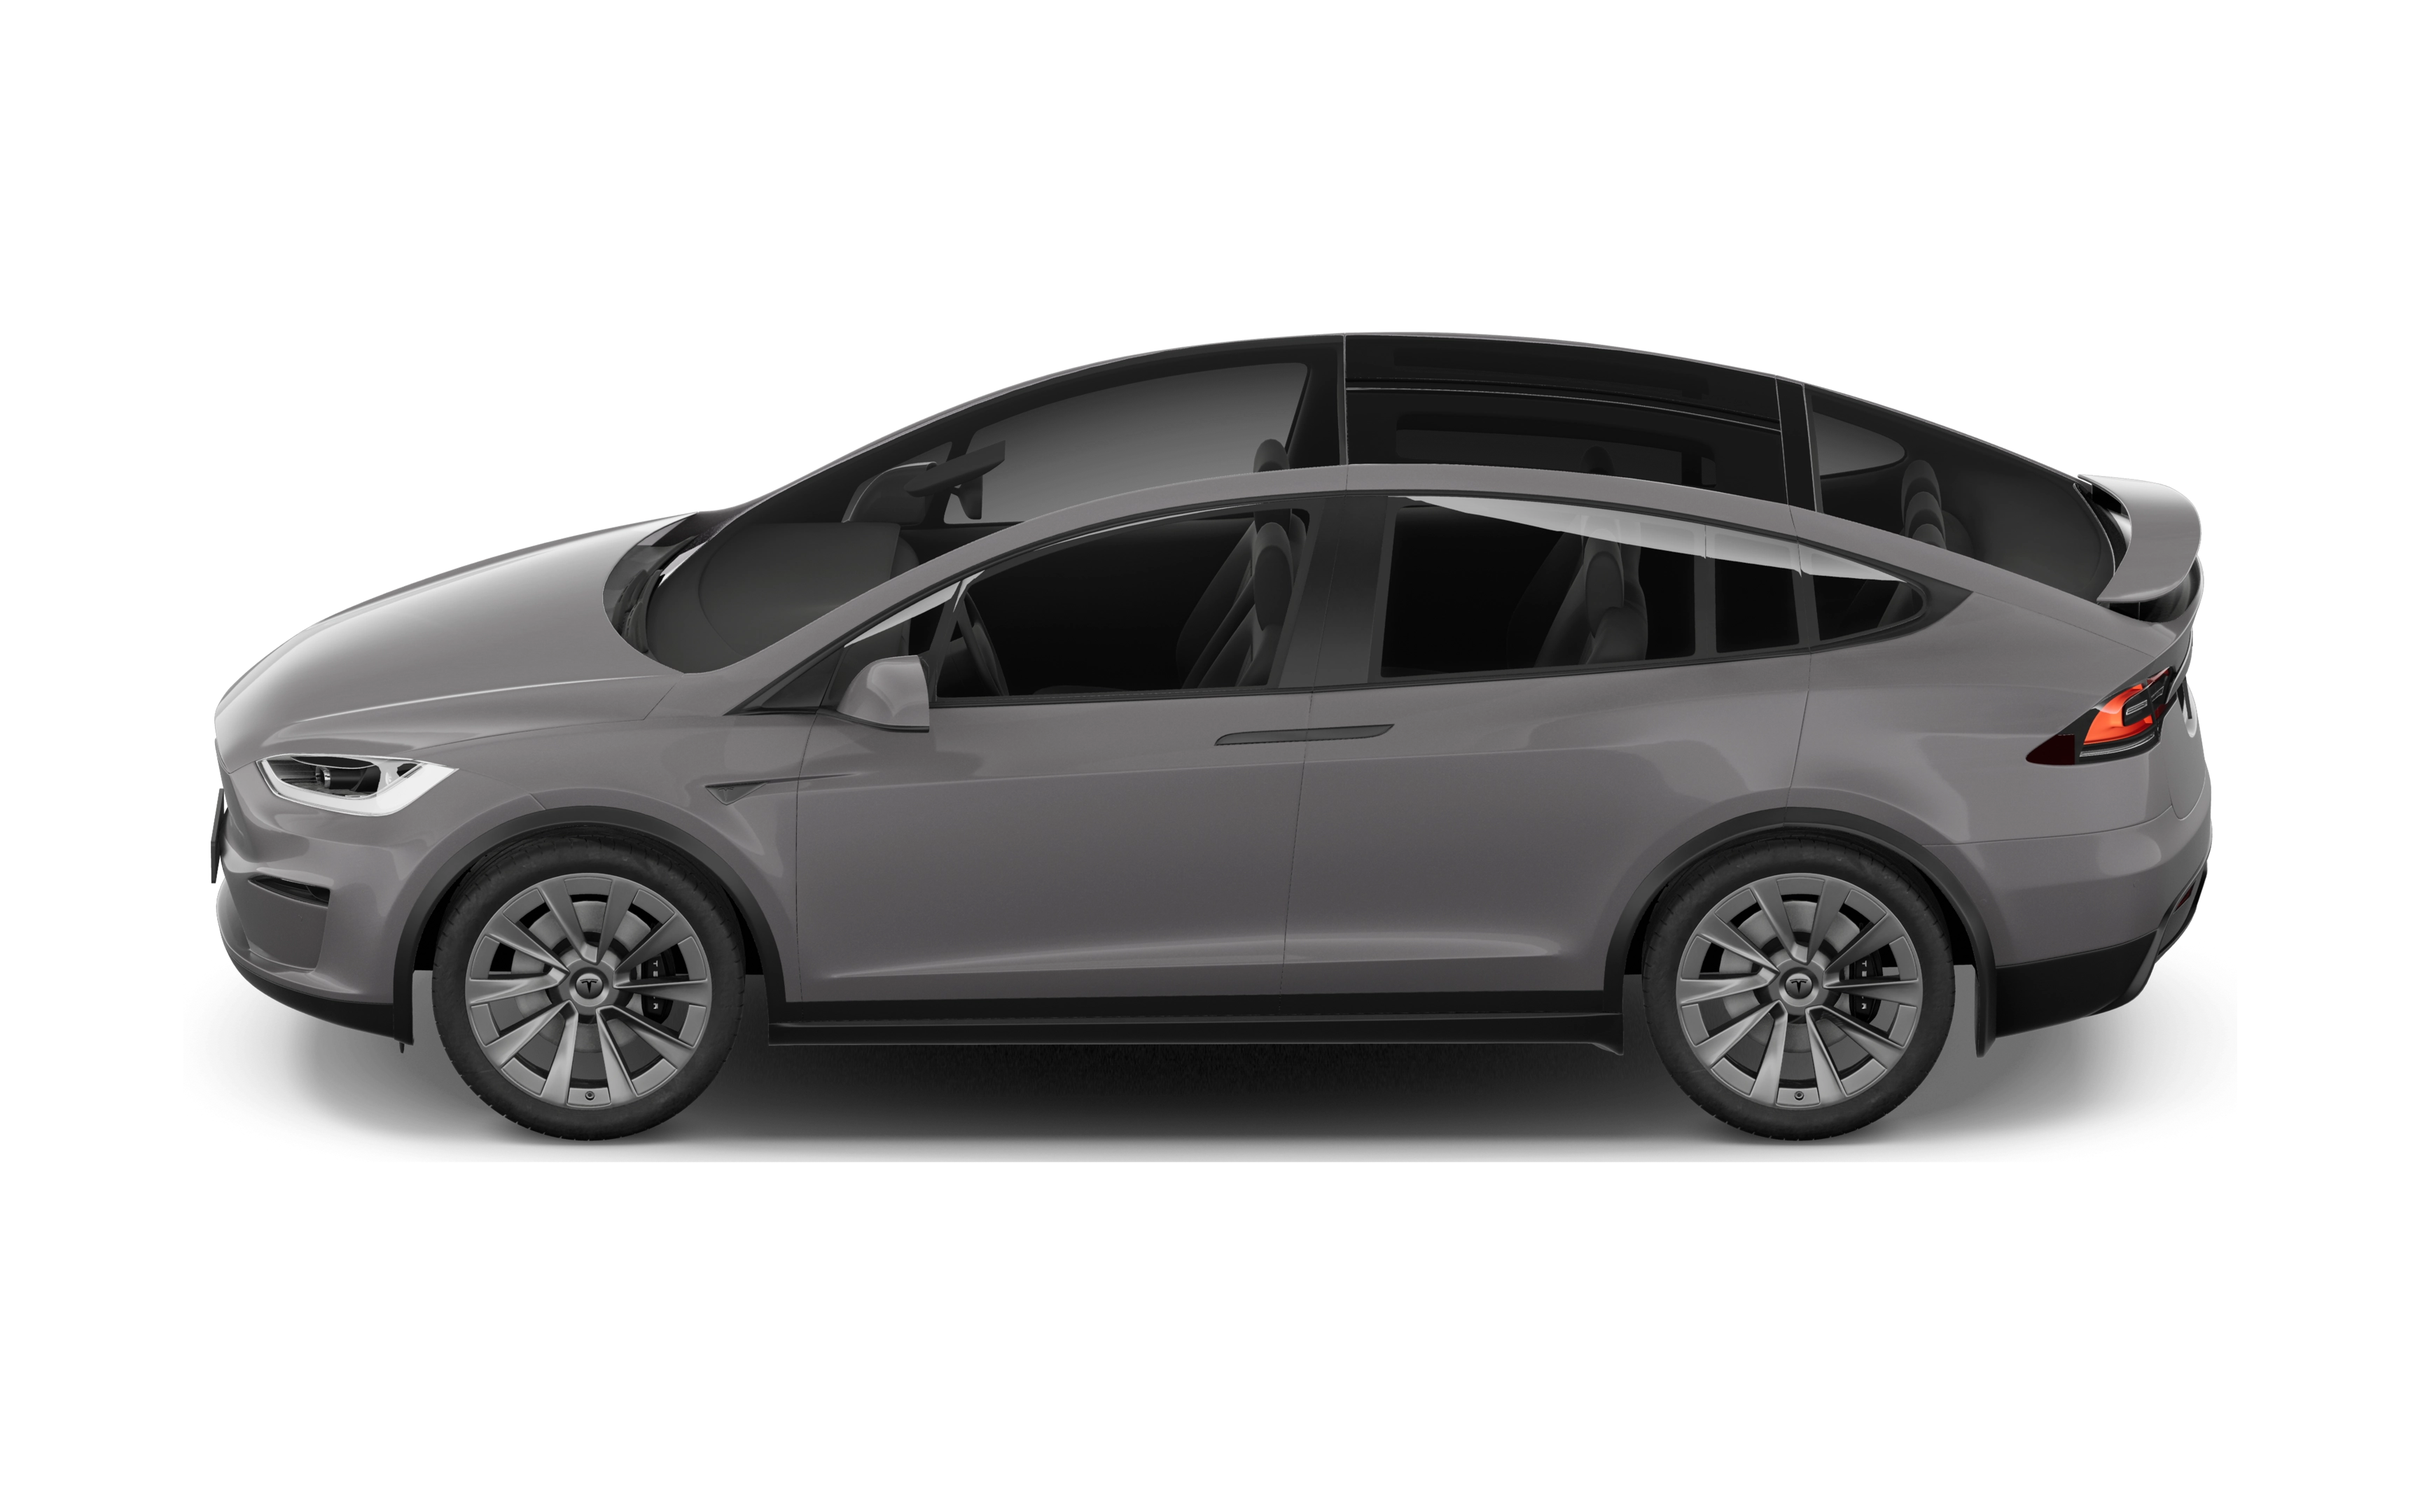 Tesla model x hatchback awd 5 doors auto [6 seat]